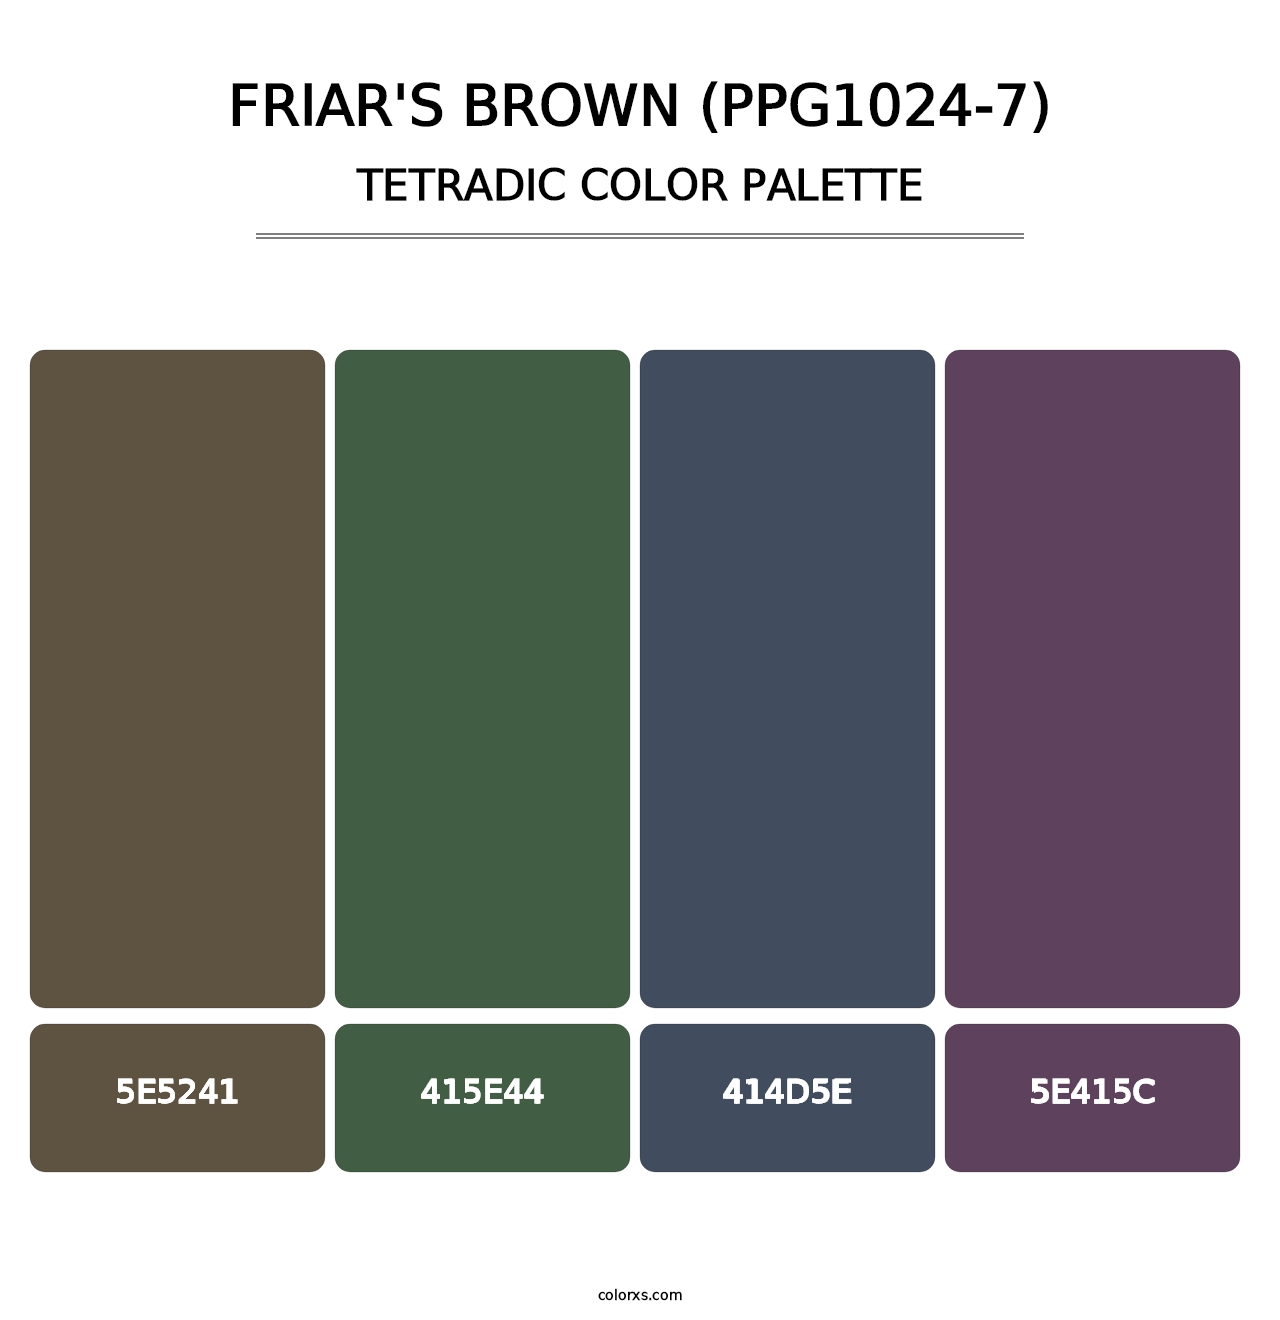 Friar's Brown (PPG1024-7) - Tetradic Color Palette